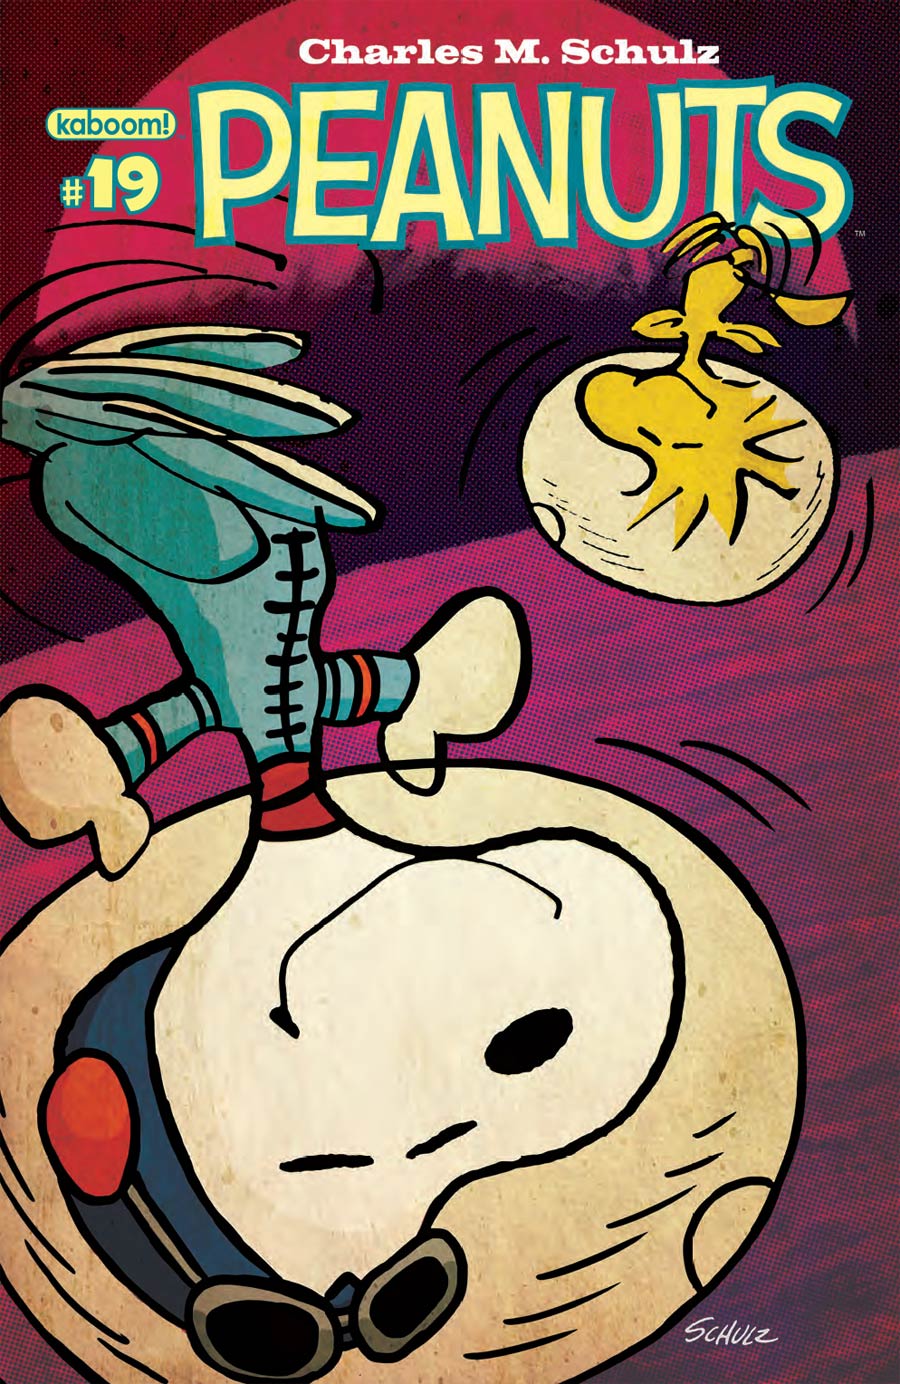 Peanuts Vol 3 #19 Cover A Regular Charles M Schulz Cover